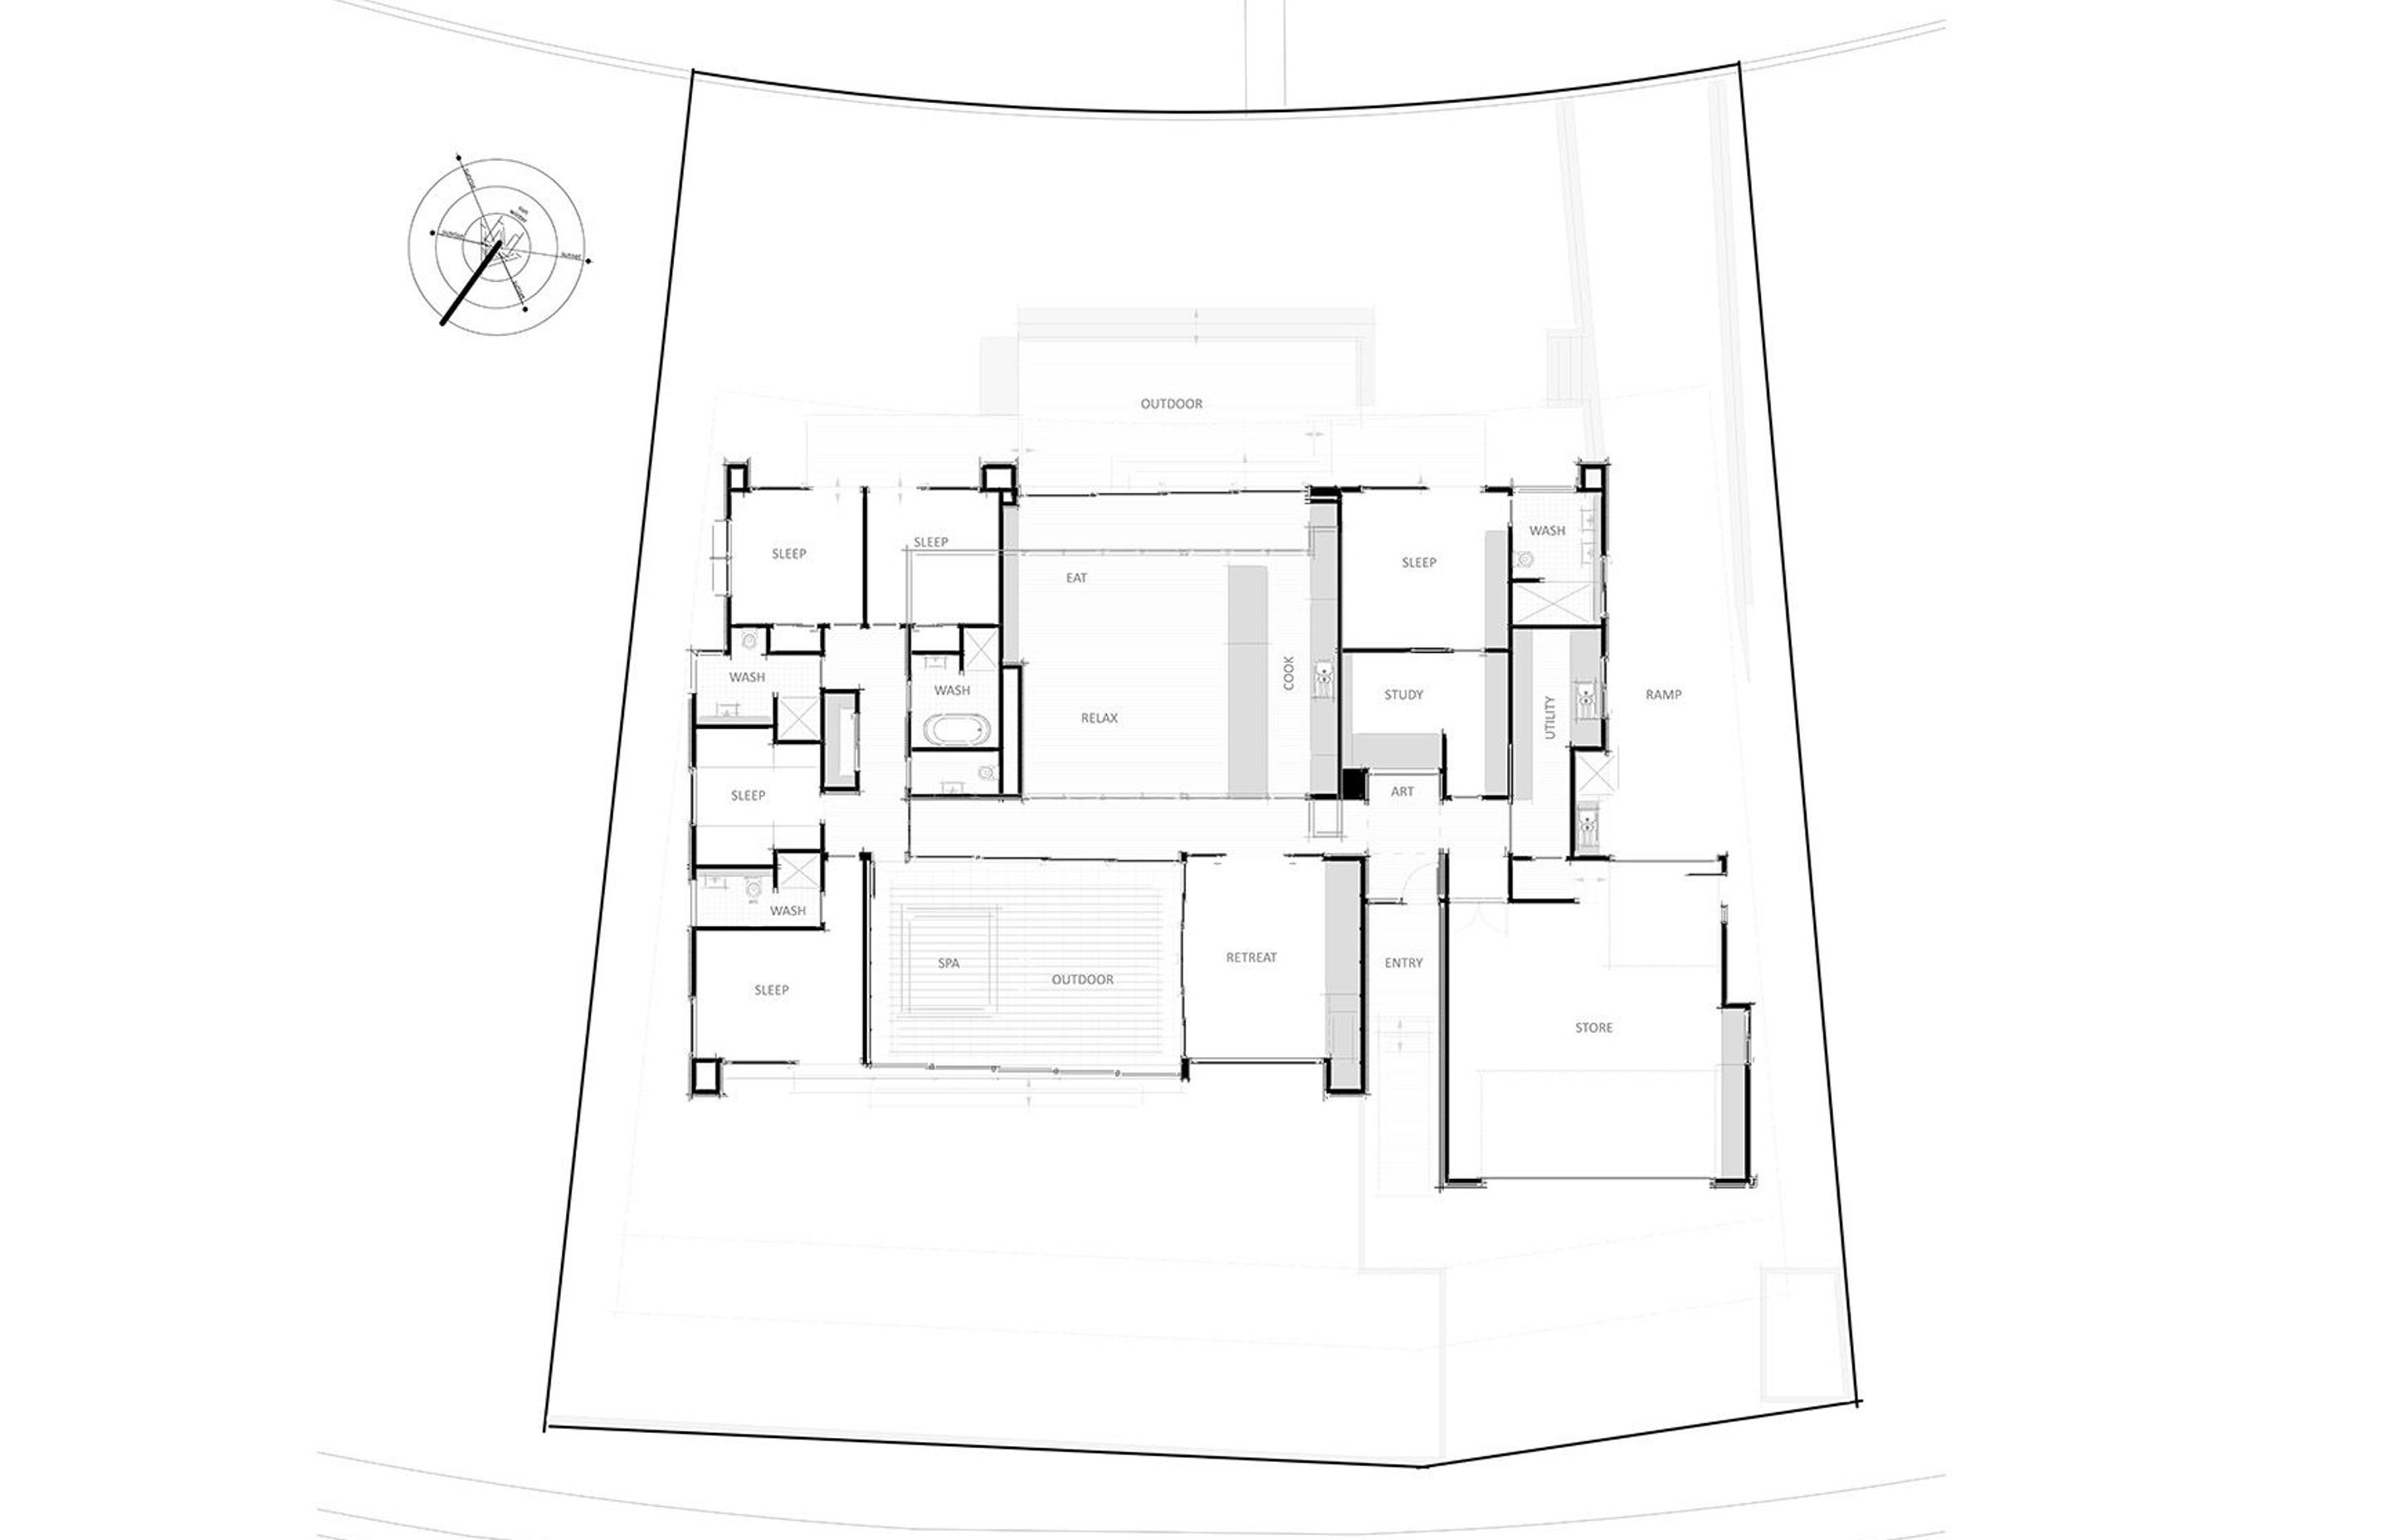 Floor plan by Adam Taylor Architecture.